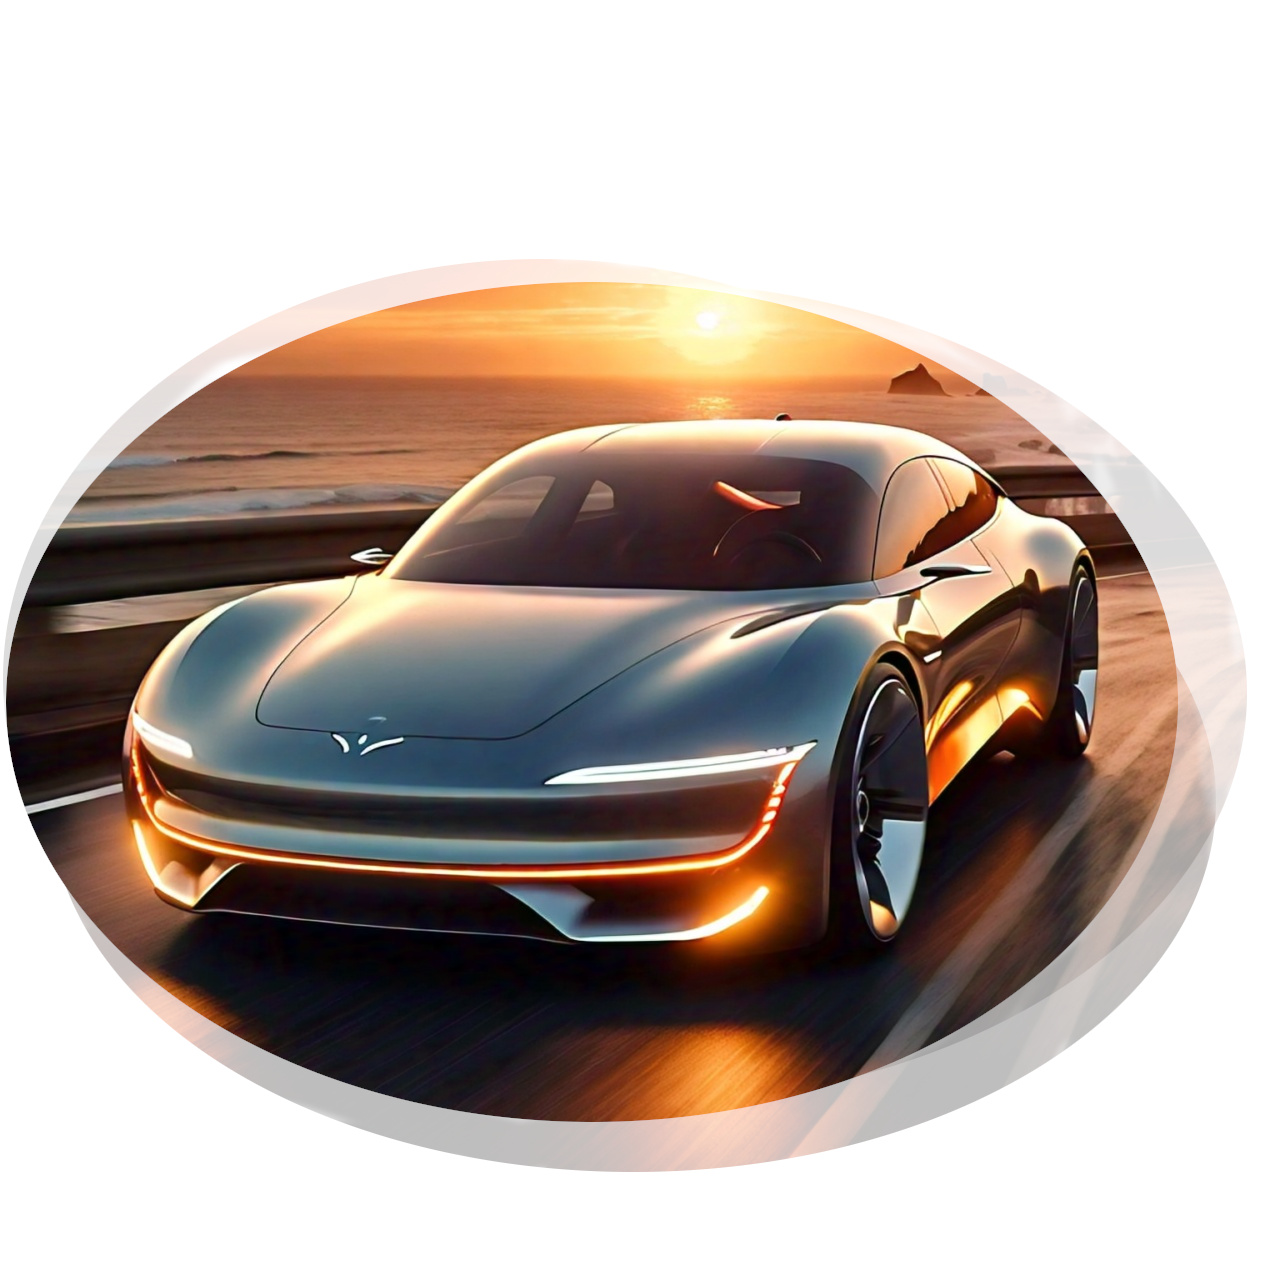 Main Tesla and EV Insurance Image